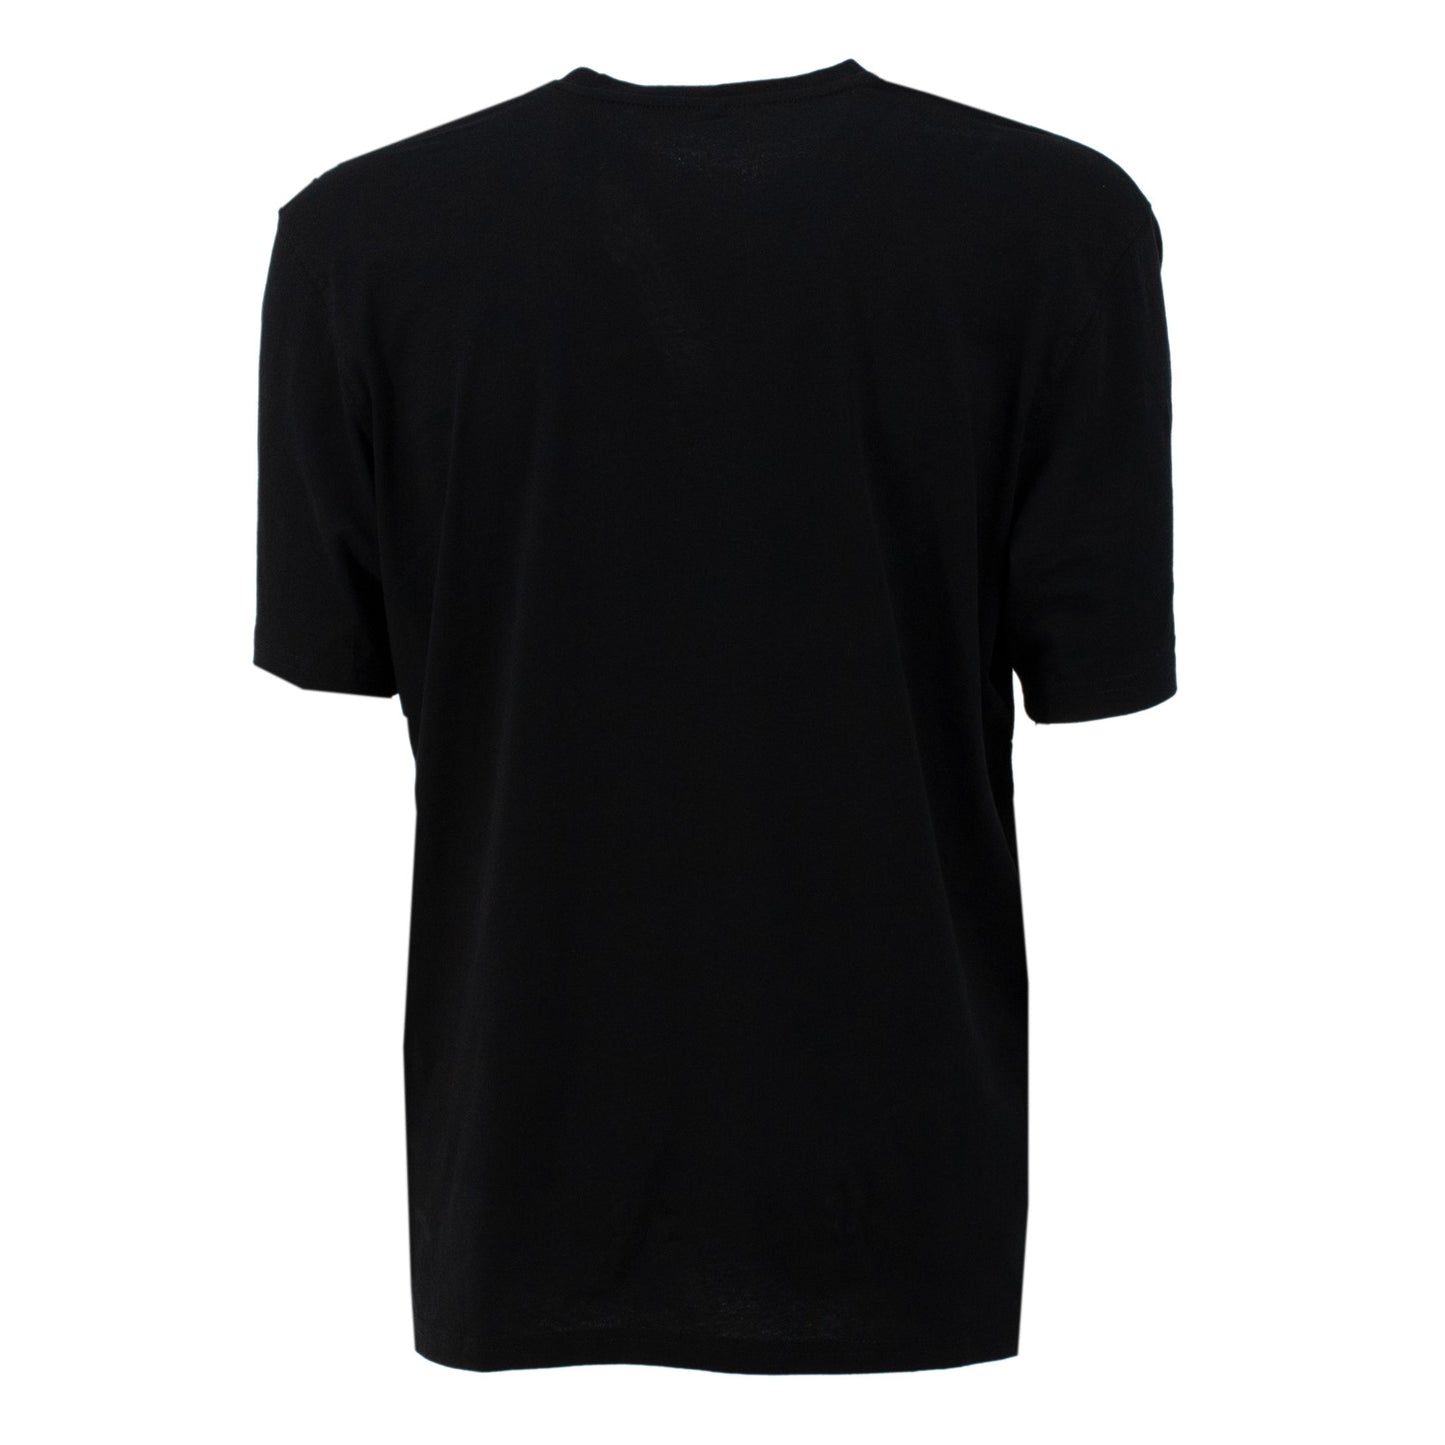 Fanatics NFL Baltimore Ravens Shatter Herren T-Shirt schwarz 1878MBLK7HWBRA